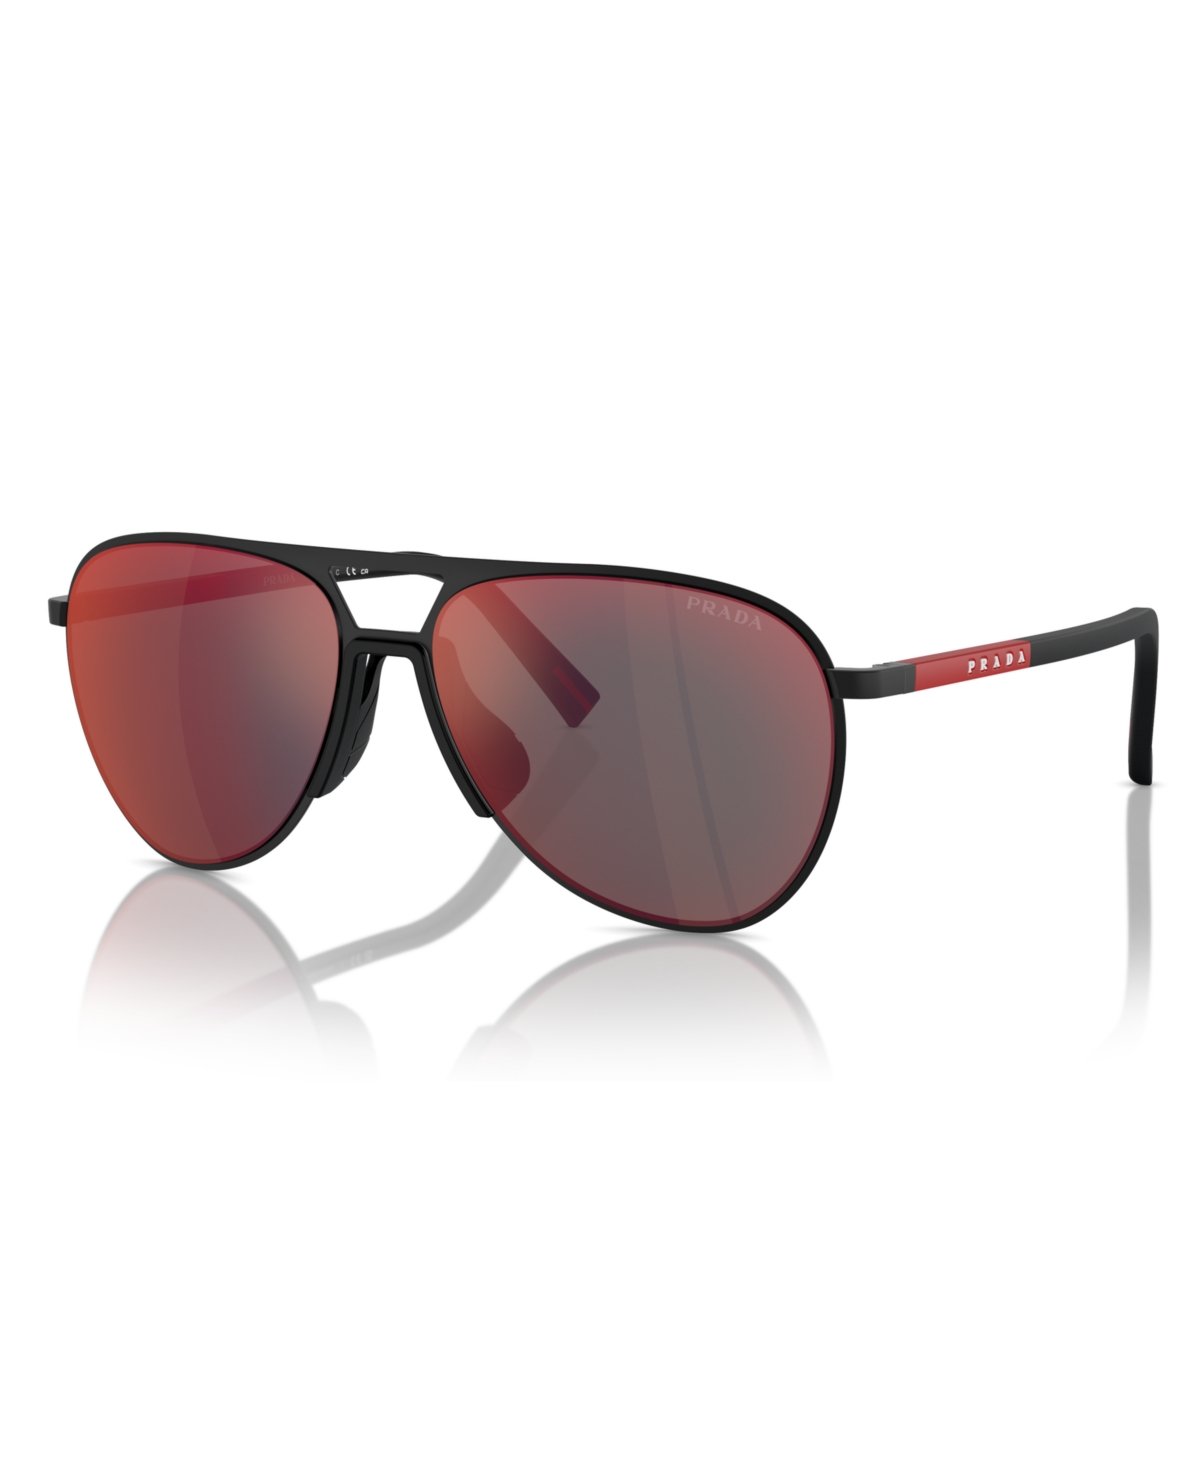 Men's Sunglasses, Ps 53ZS - Black Rubber